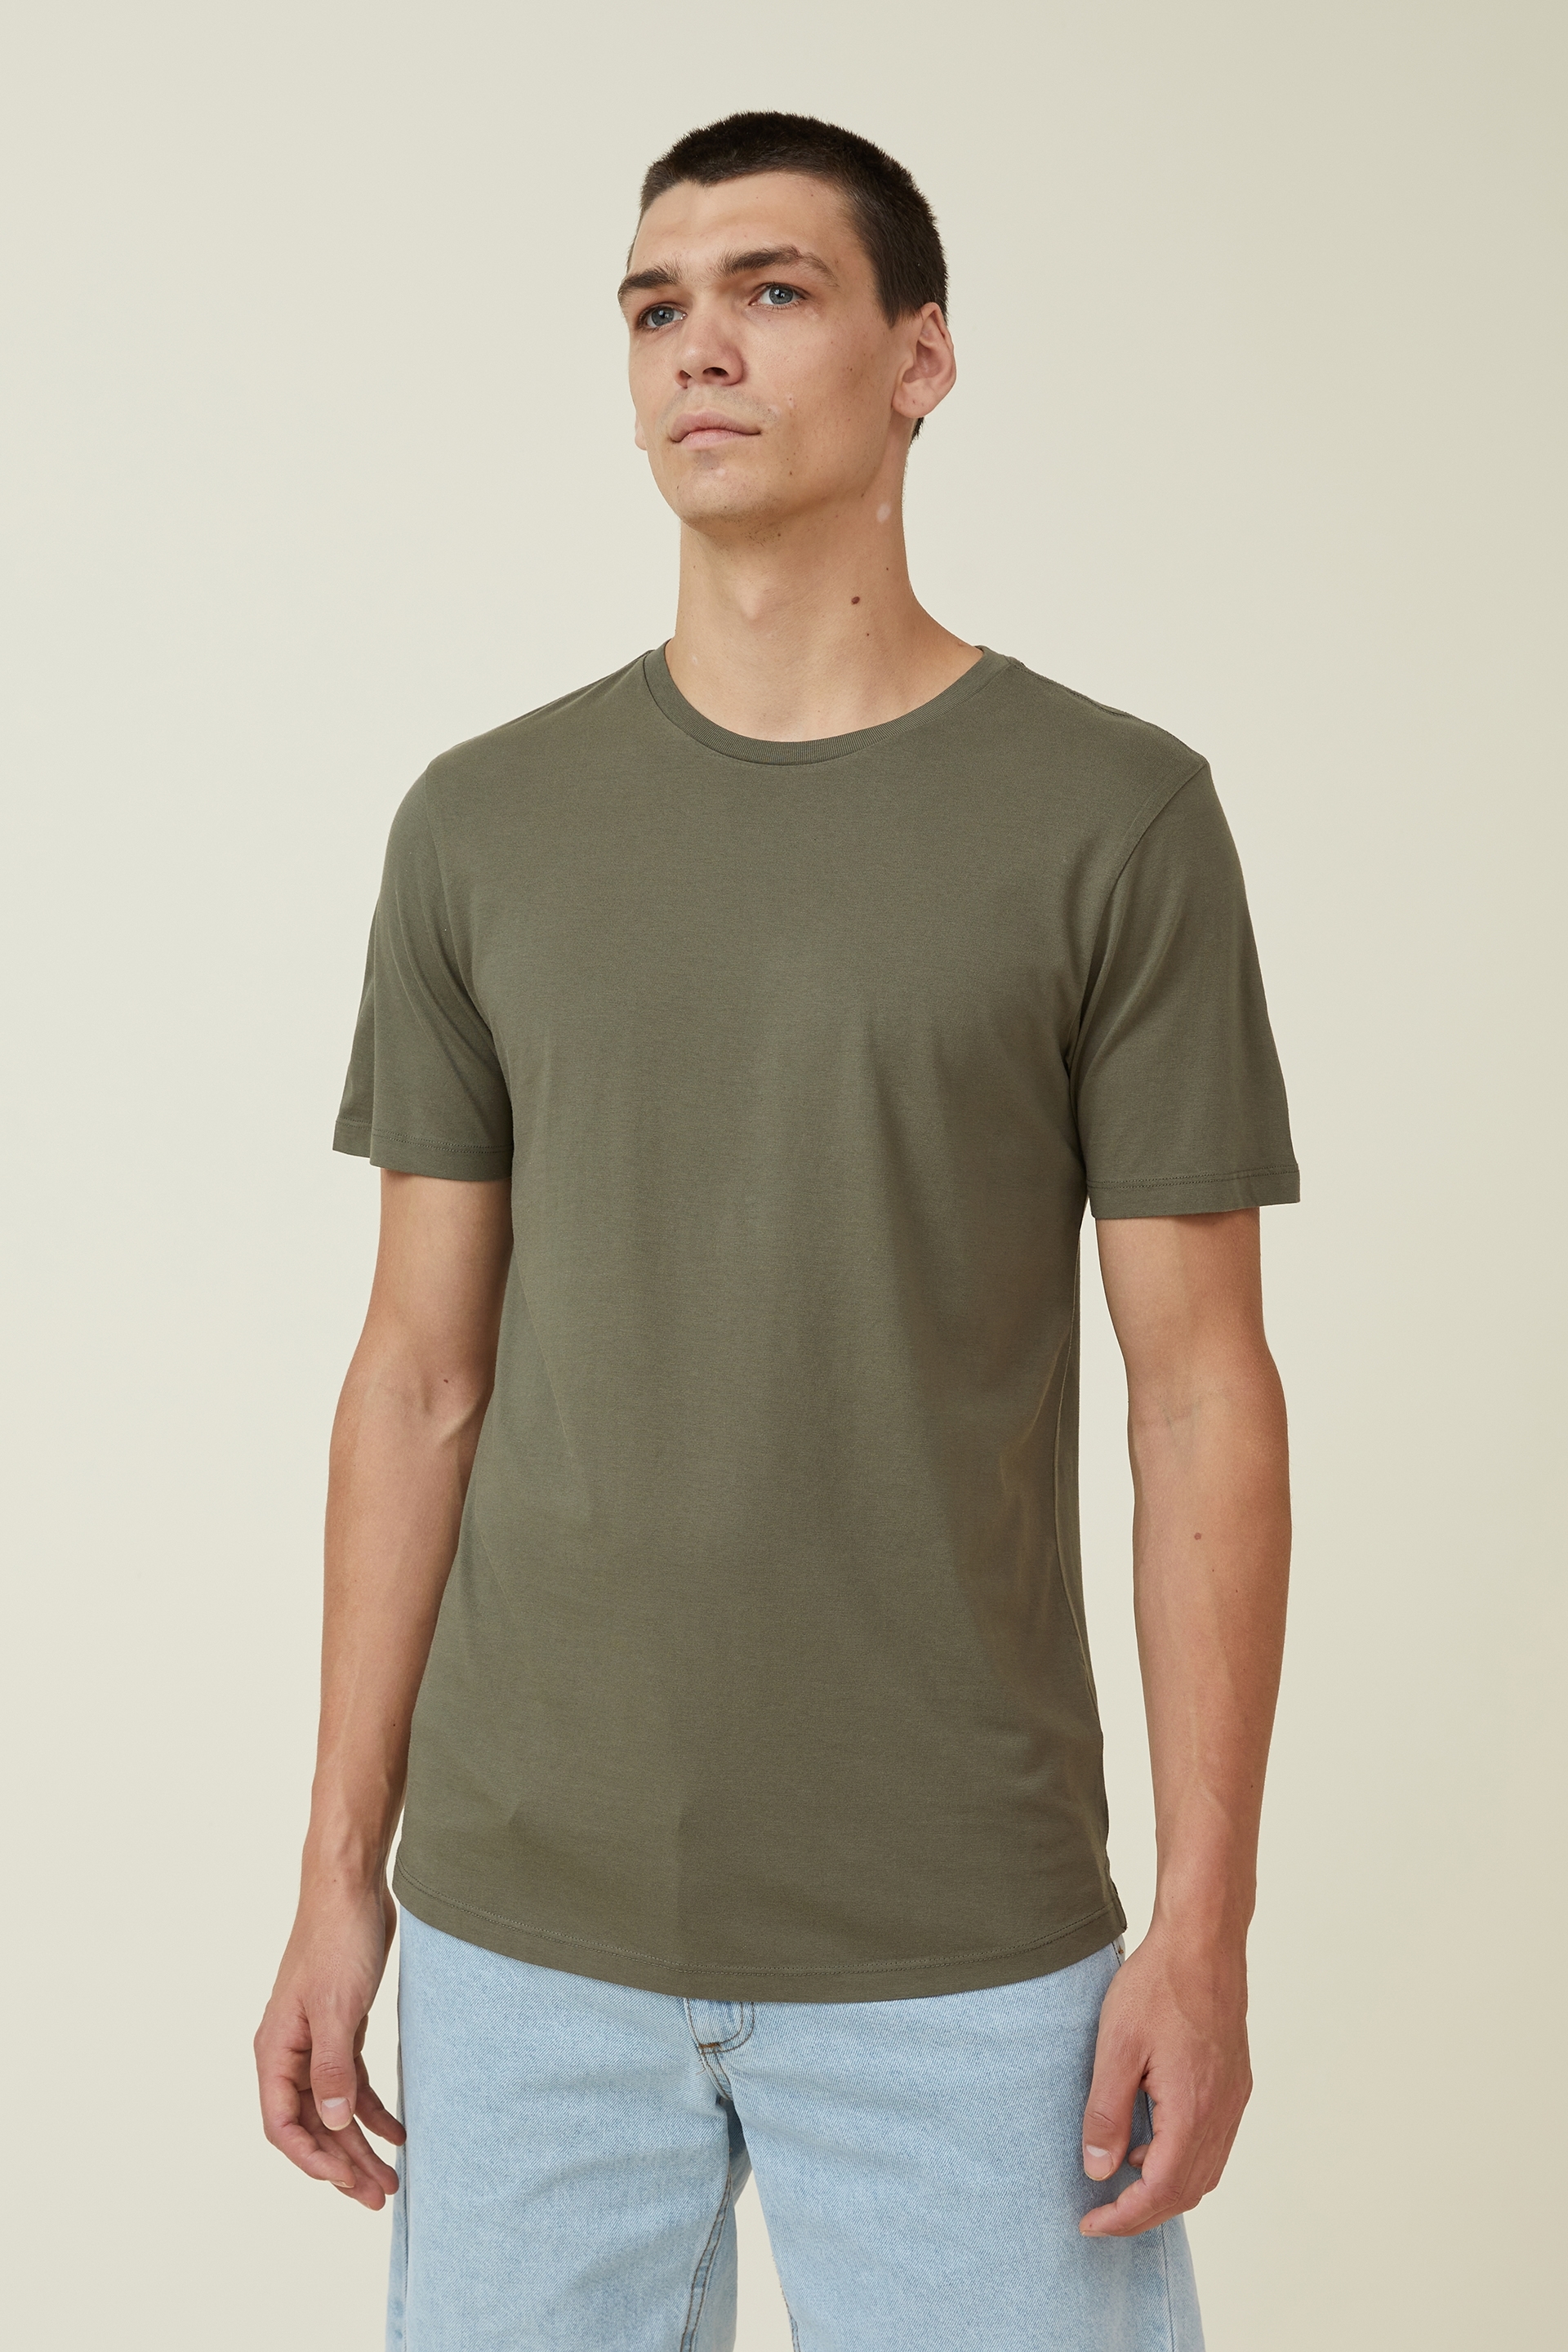 Cotton On Men - Organic Longline T-Shirt - Military